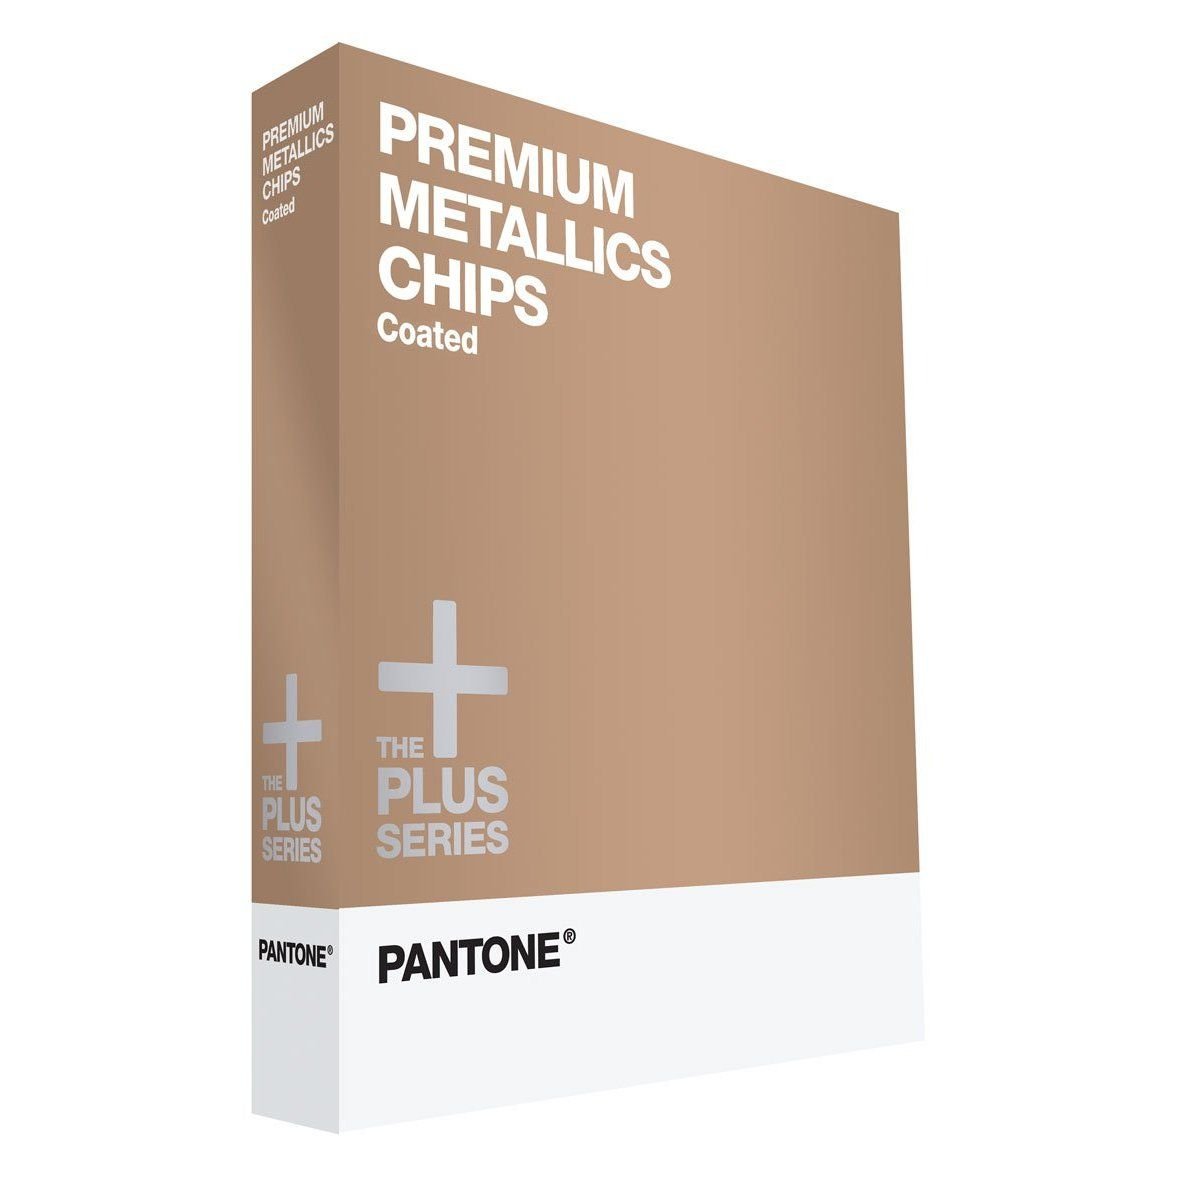 PANTONE PREMIUM METALLICS CHIPS Coated-GB1305